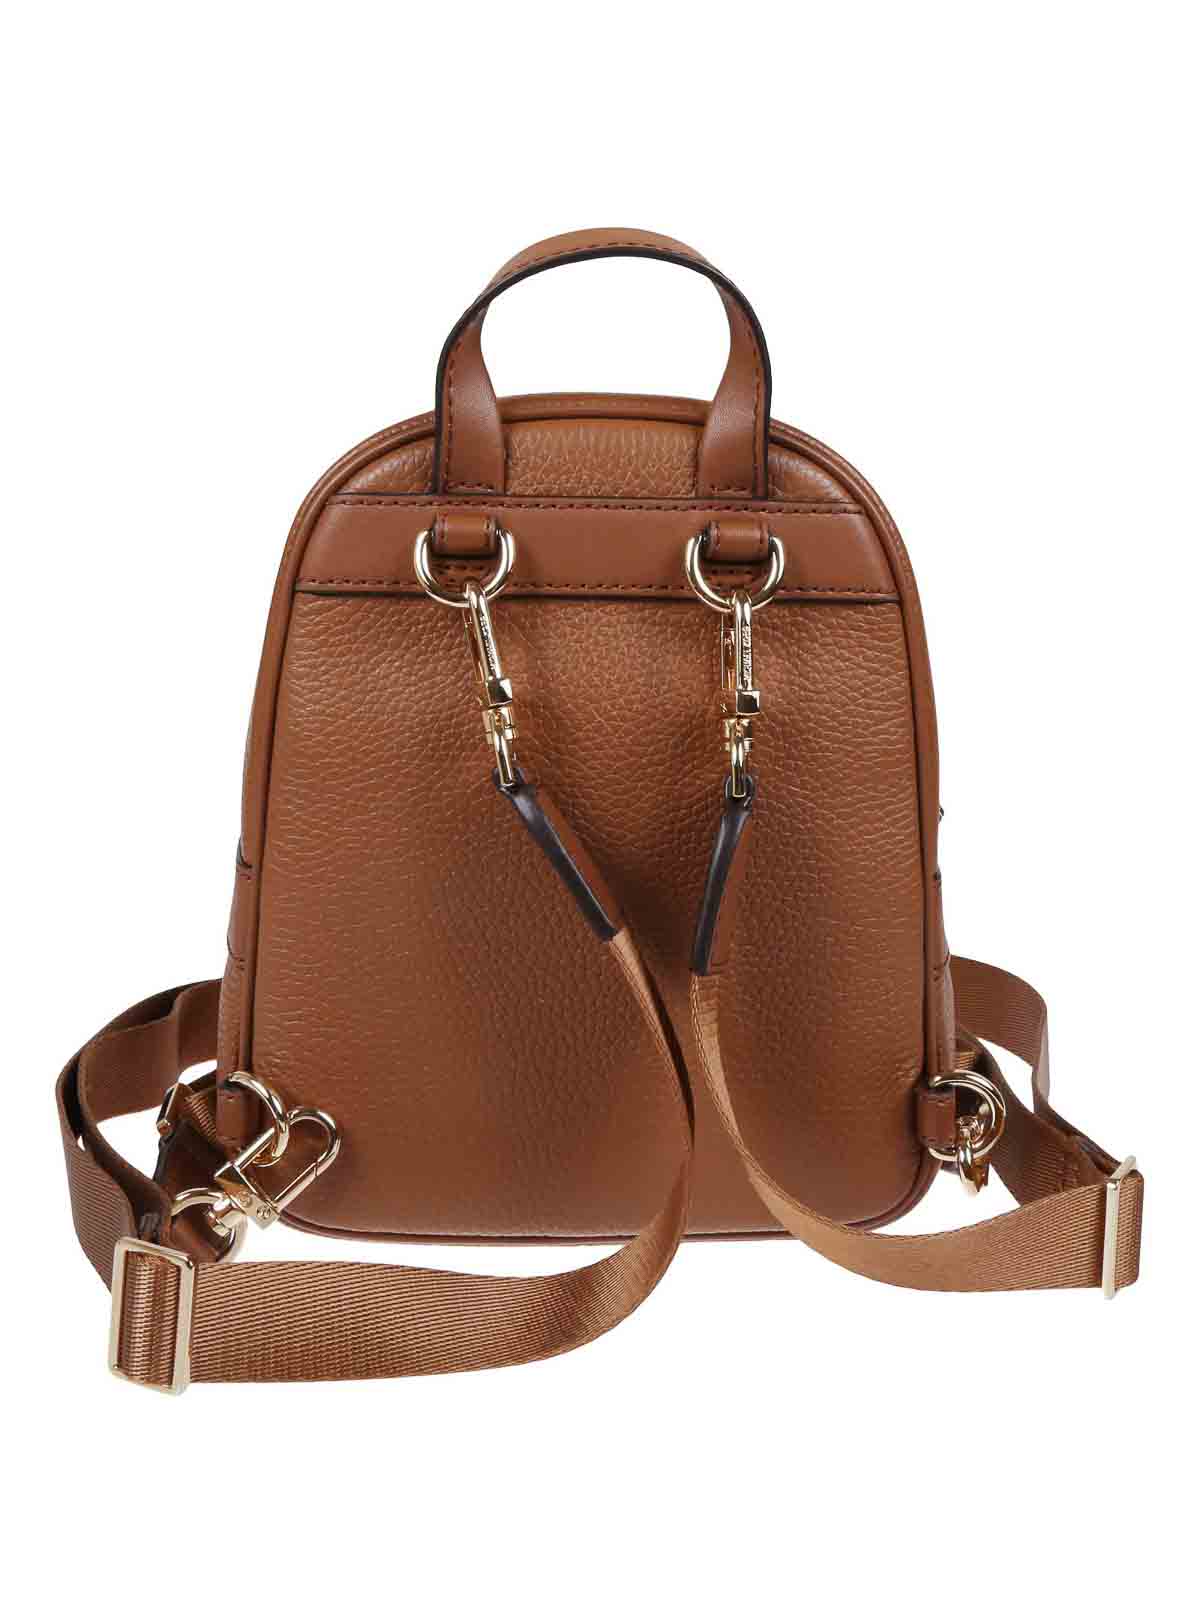 Rhea Medium Metallic Quilted-Leather Backpack | Michael Kors